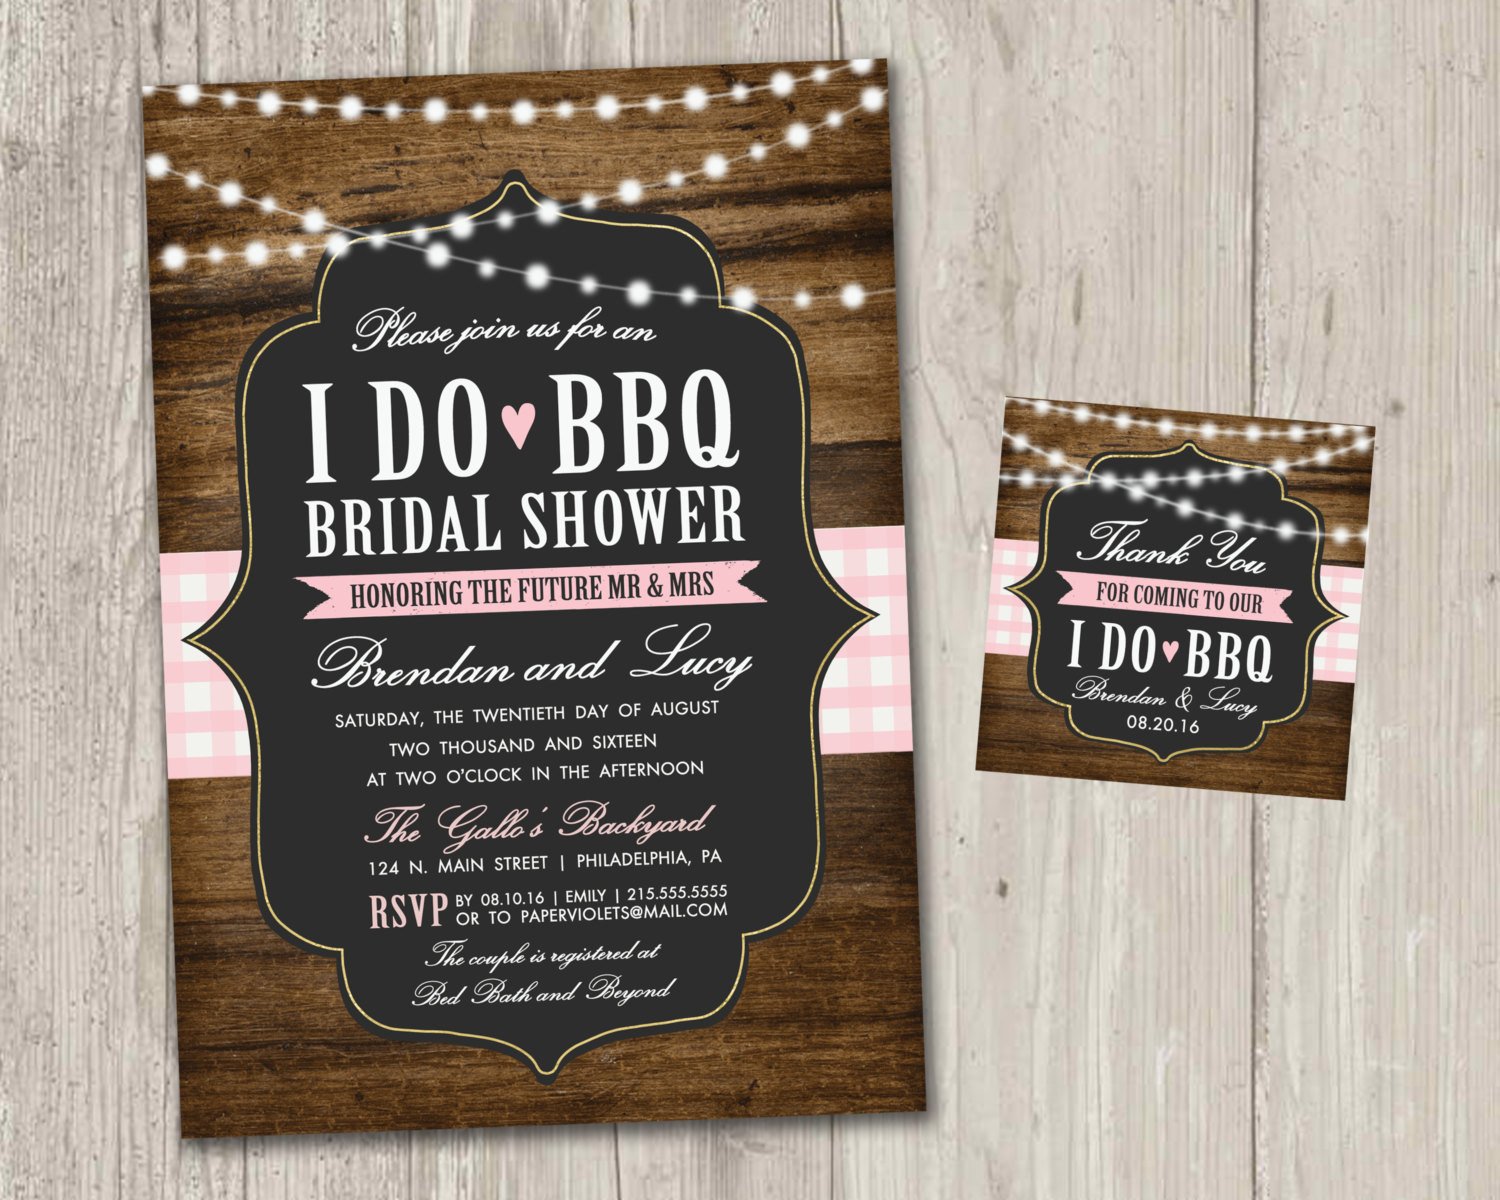 I Do BBQ Bridal Shower Invitations Backyard Wedding